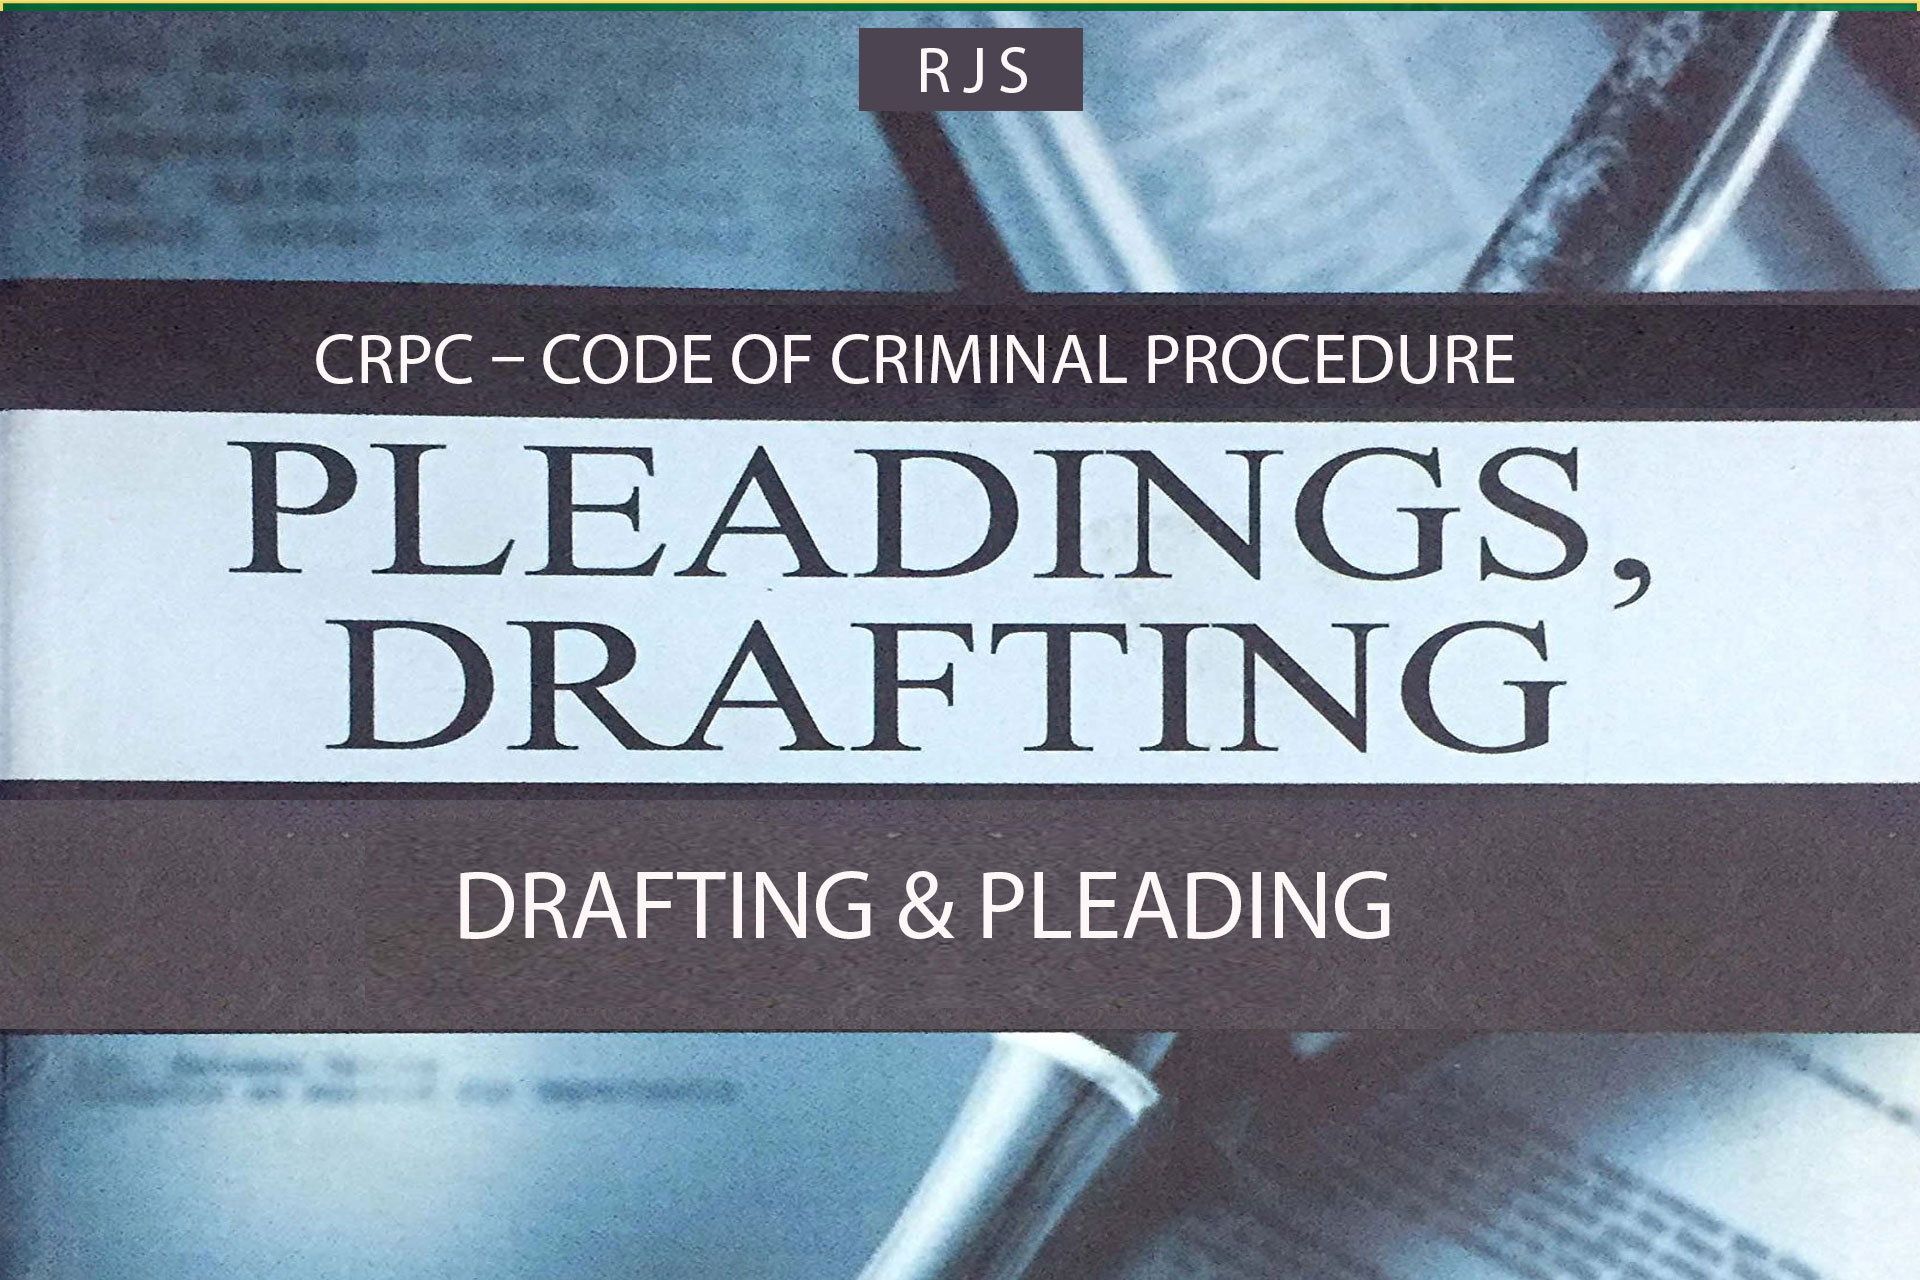 Drafting & Pleading – RJS